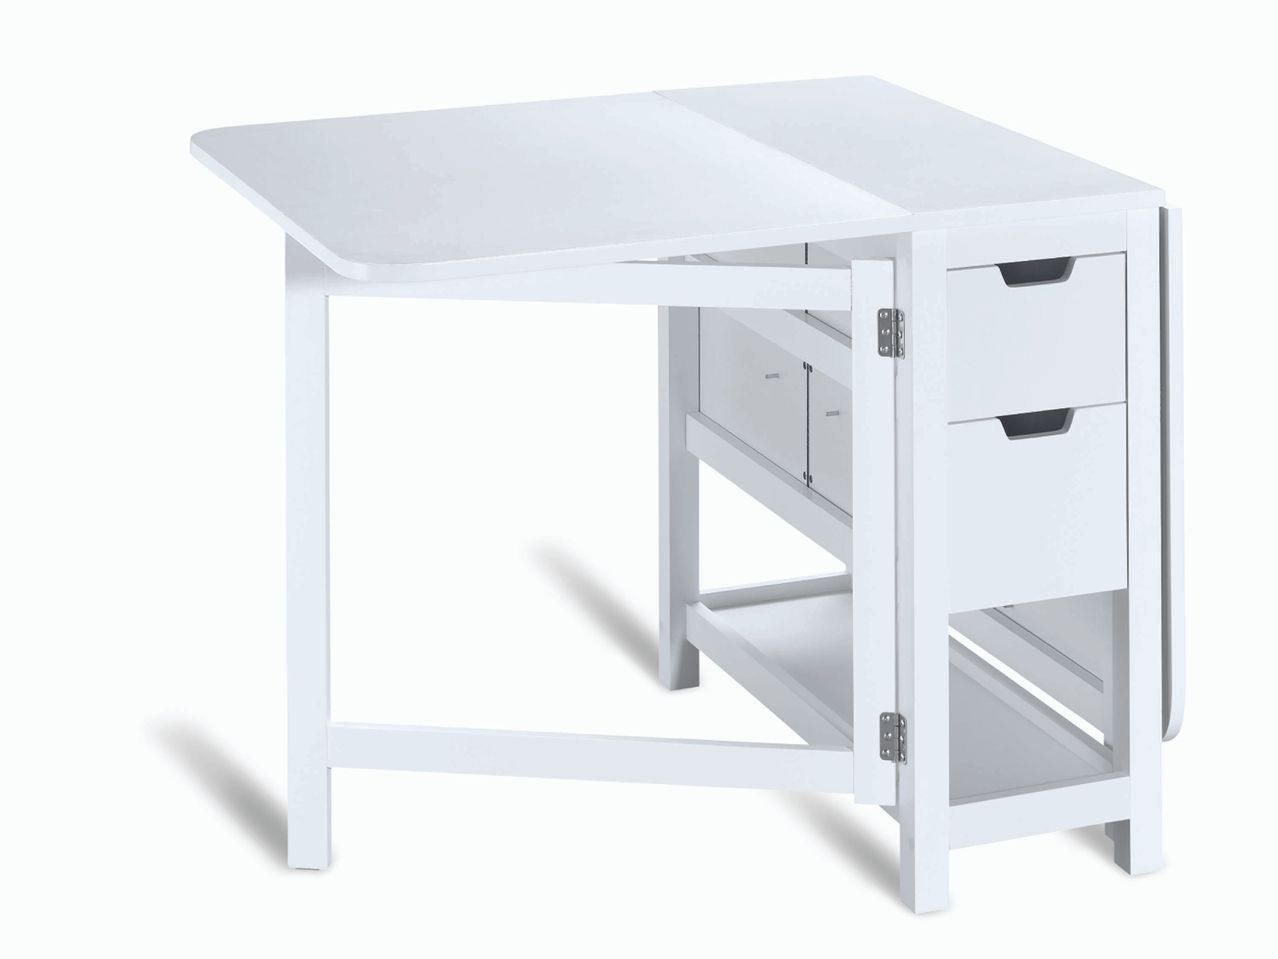 Table pliante , prezzo 99 EUR 
Table pliante 
- Dimensions par plateau : env. 80 ...